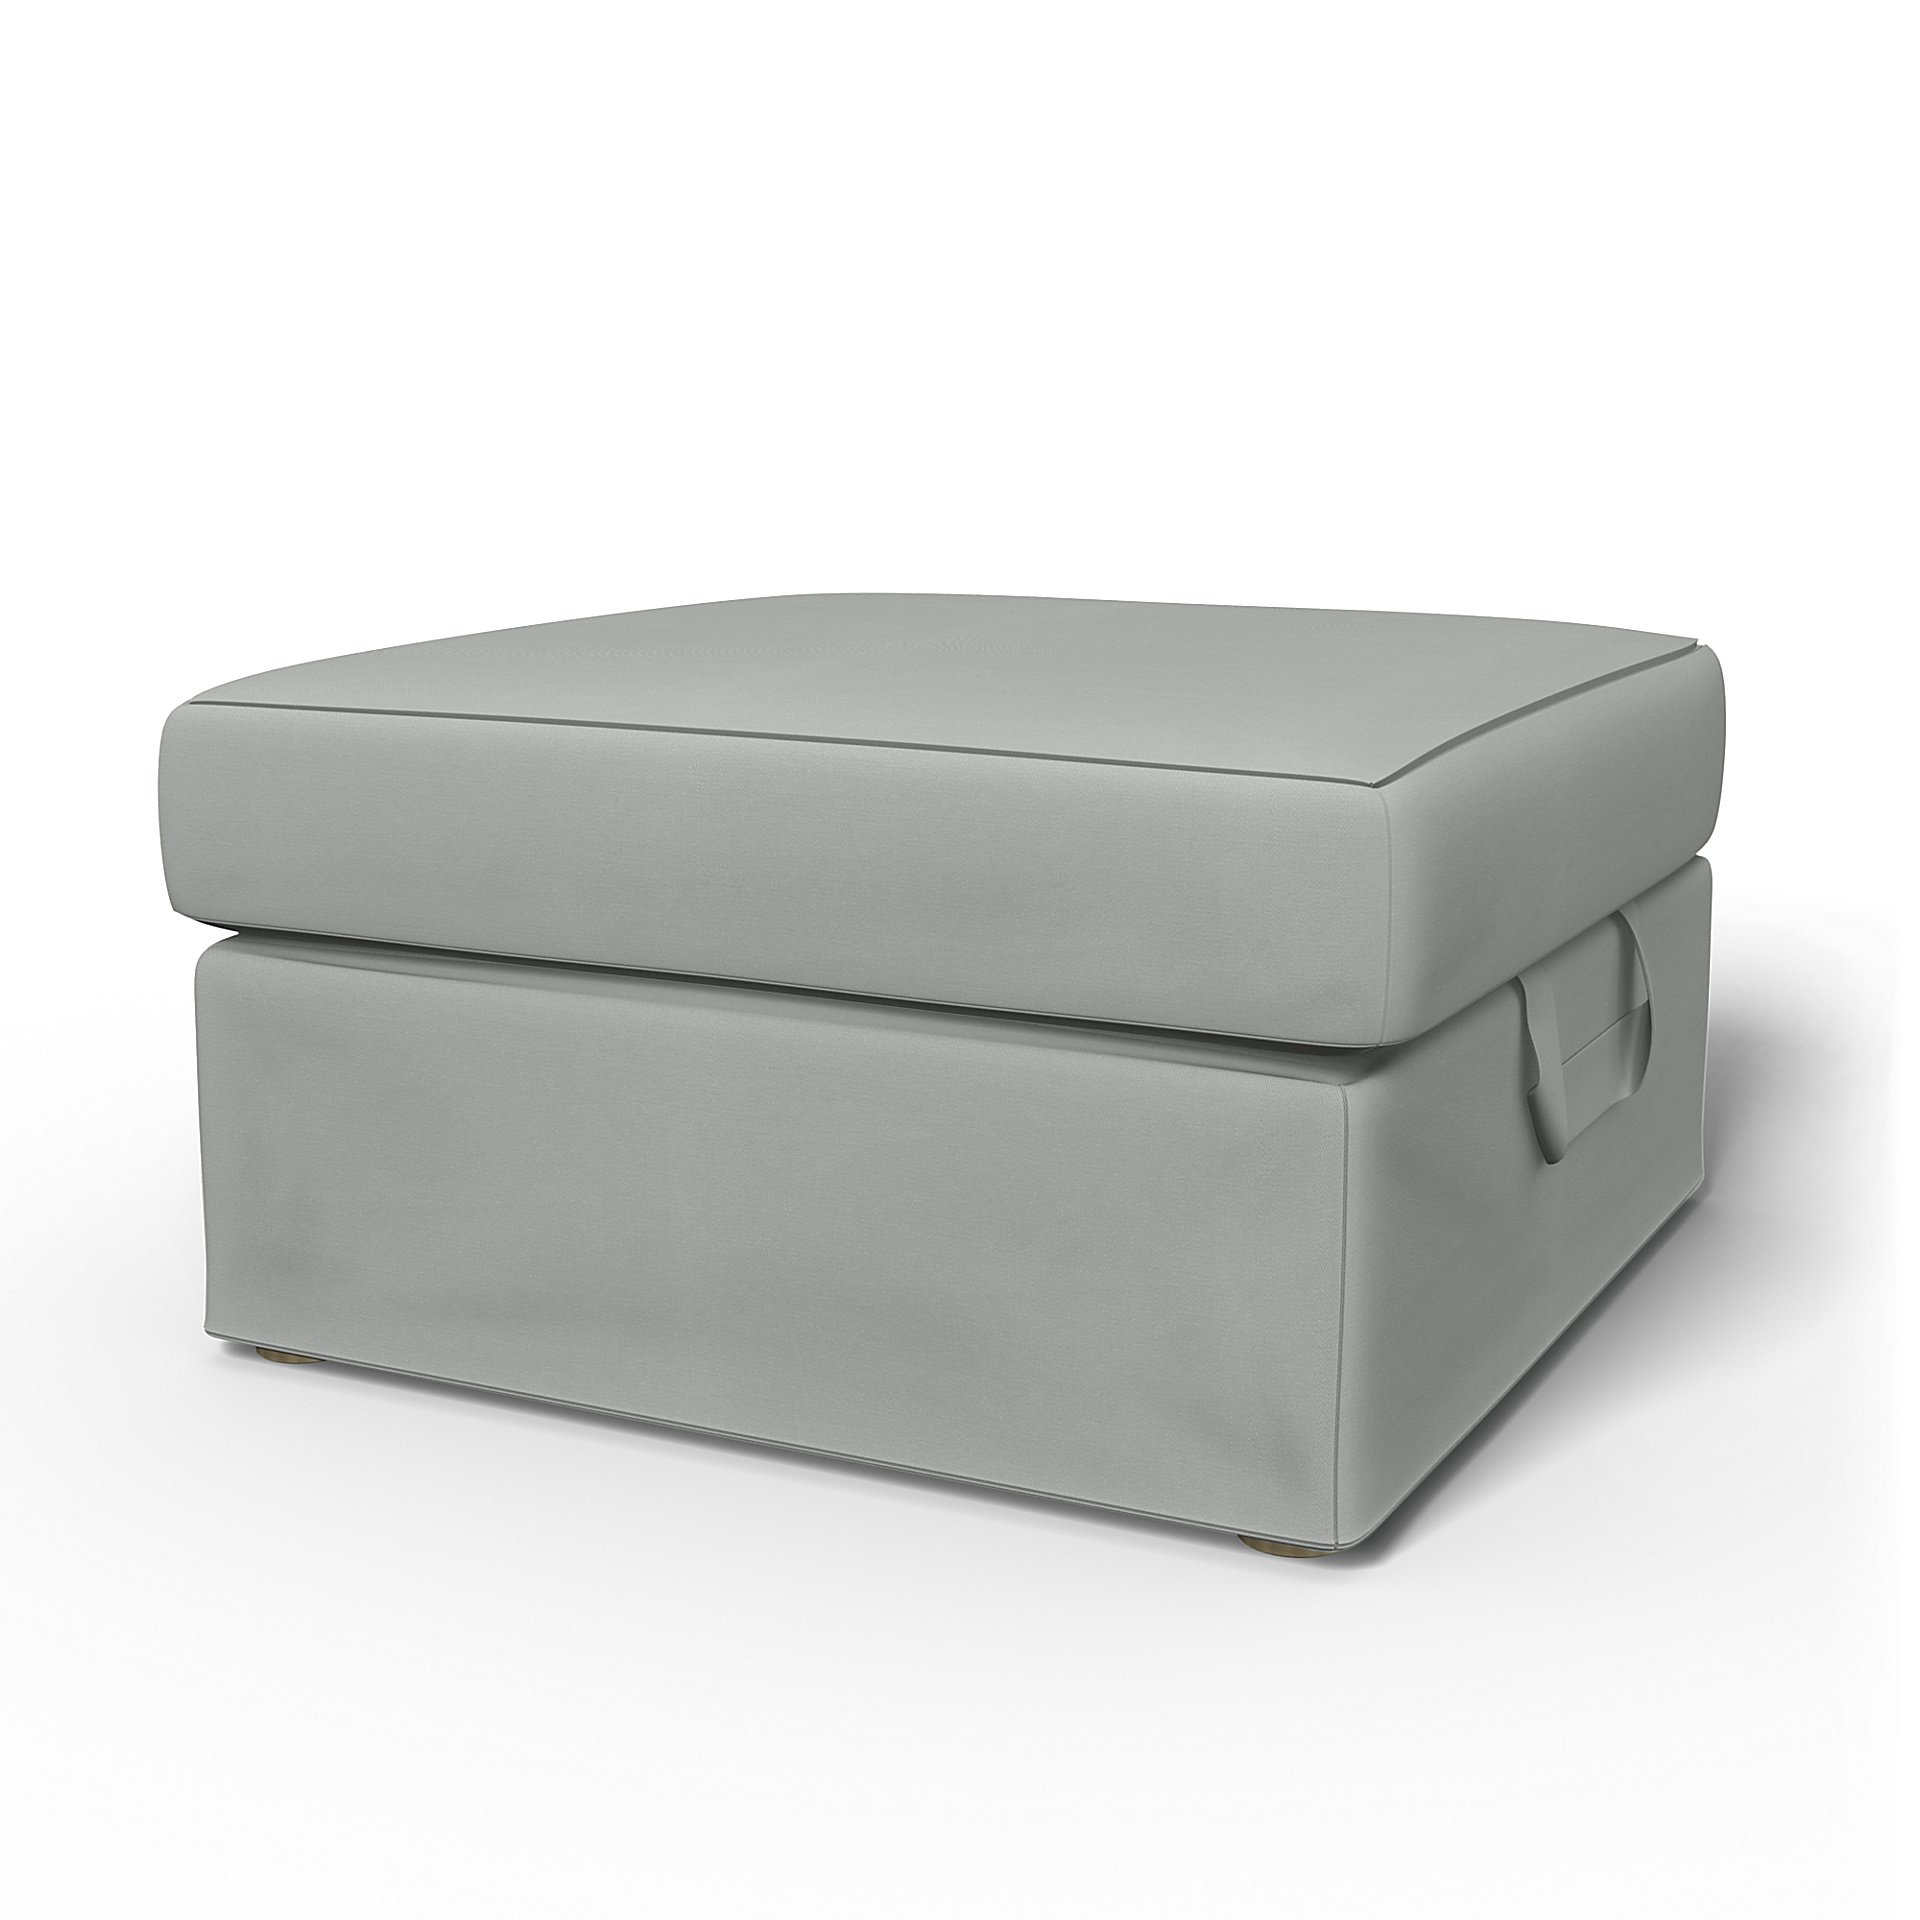 IKEA - Tomelilla Foto Footstool Cover, Silver Grey, Cotton - Bemz